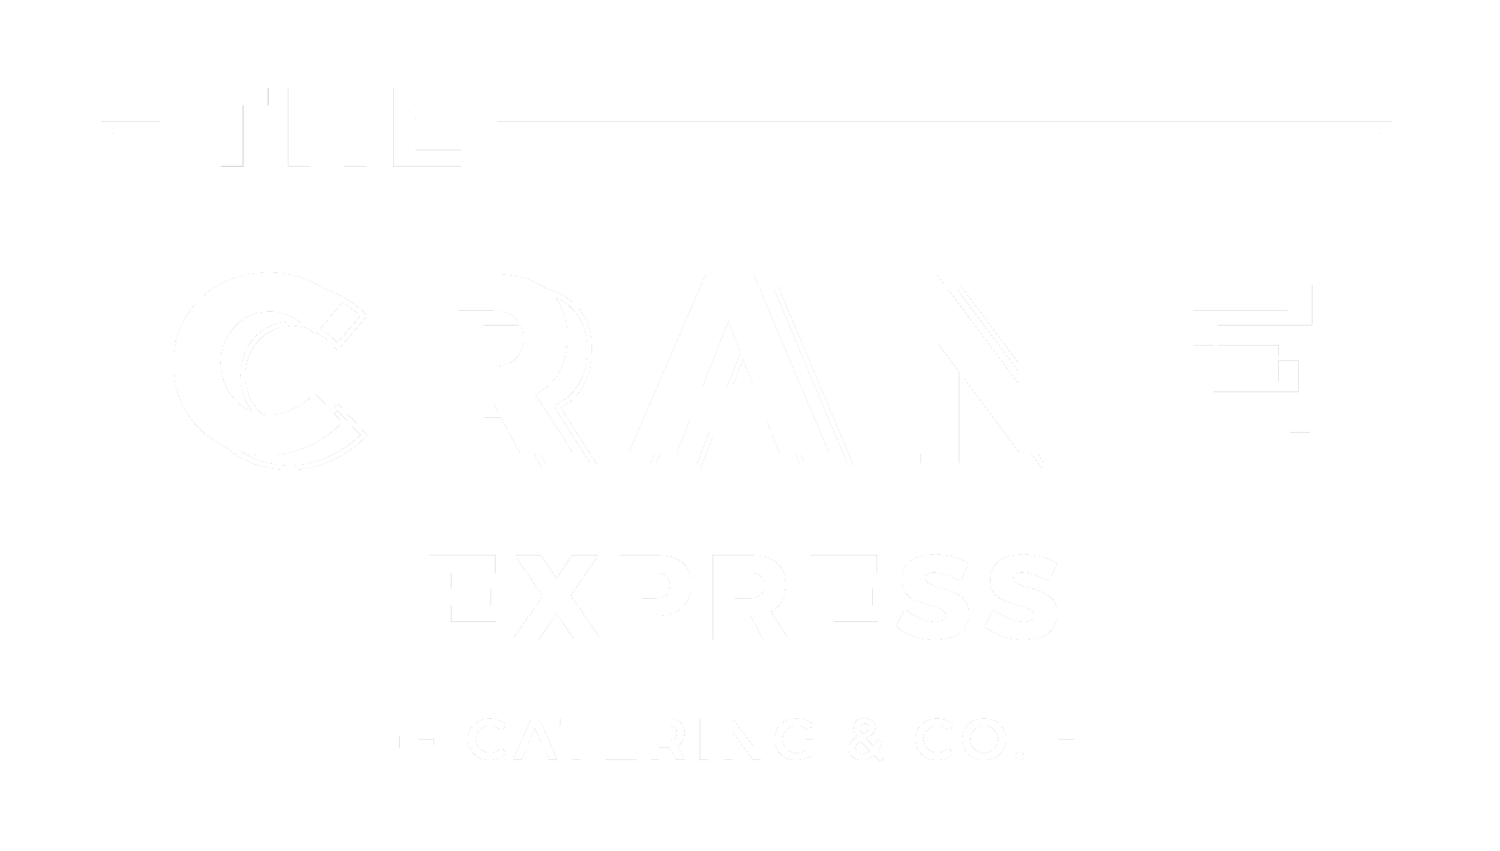 The Crane Express